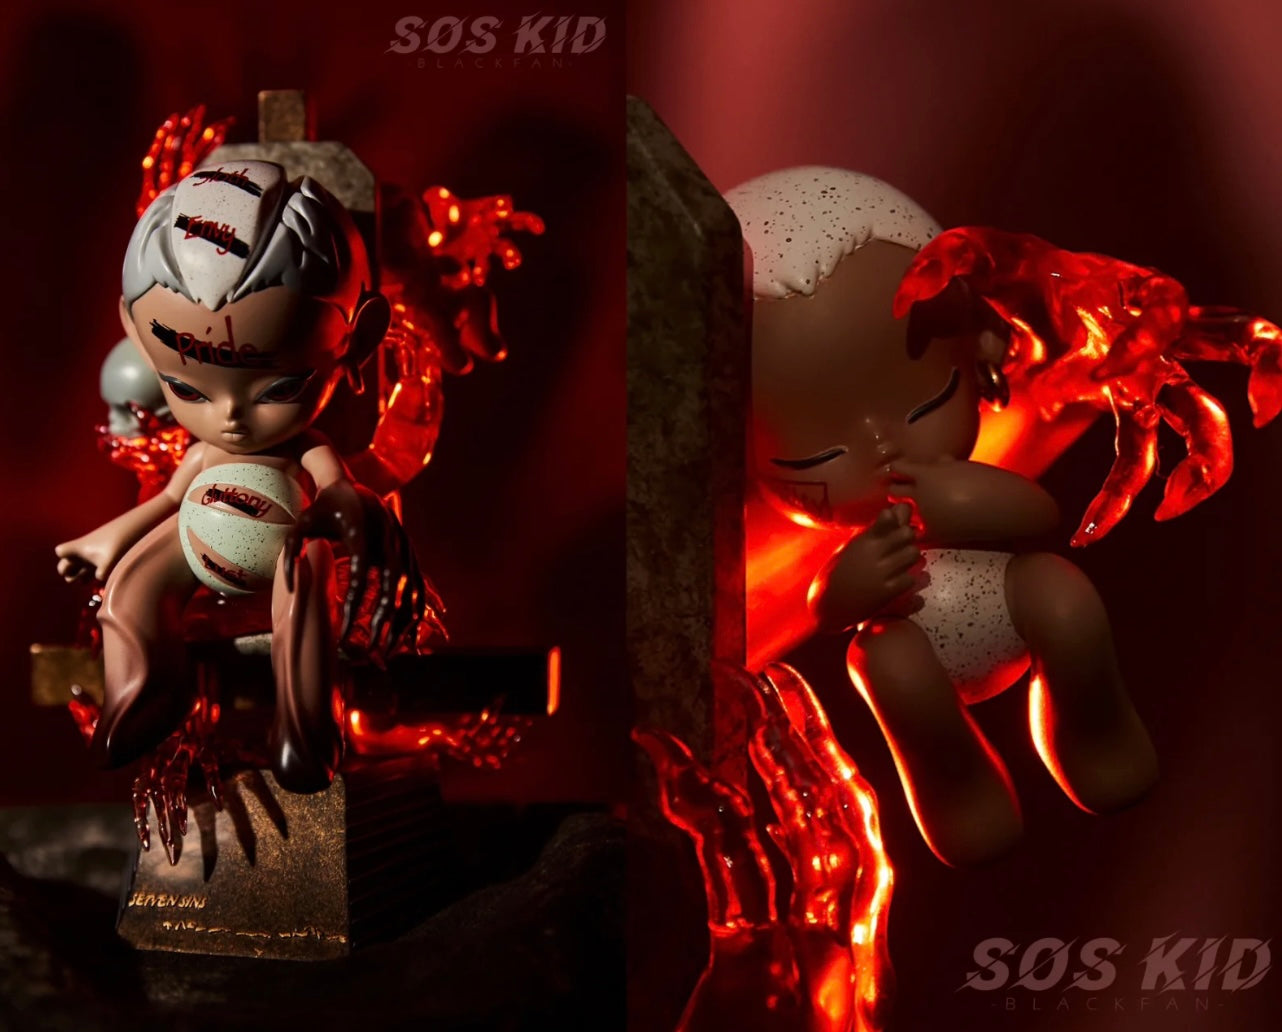 [FUNFORFUN] SOS KID - "Devil" Limited Art Toy